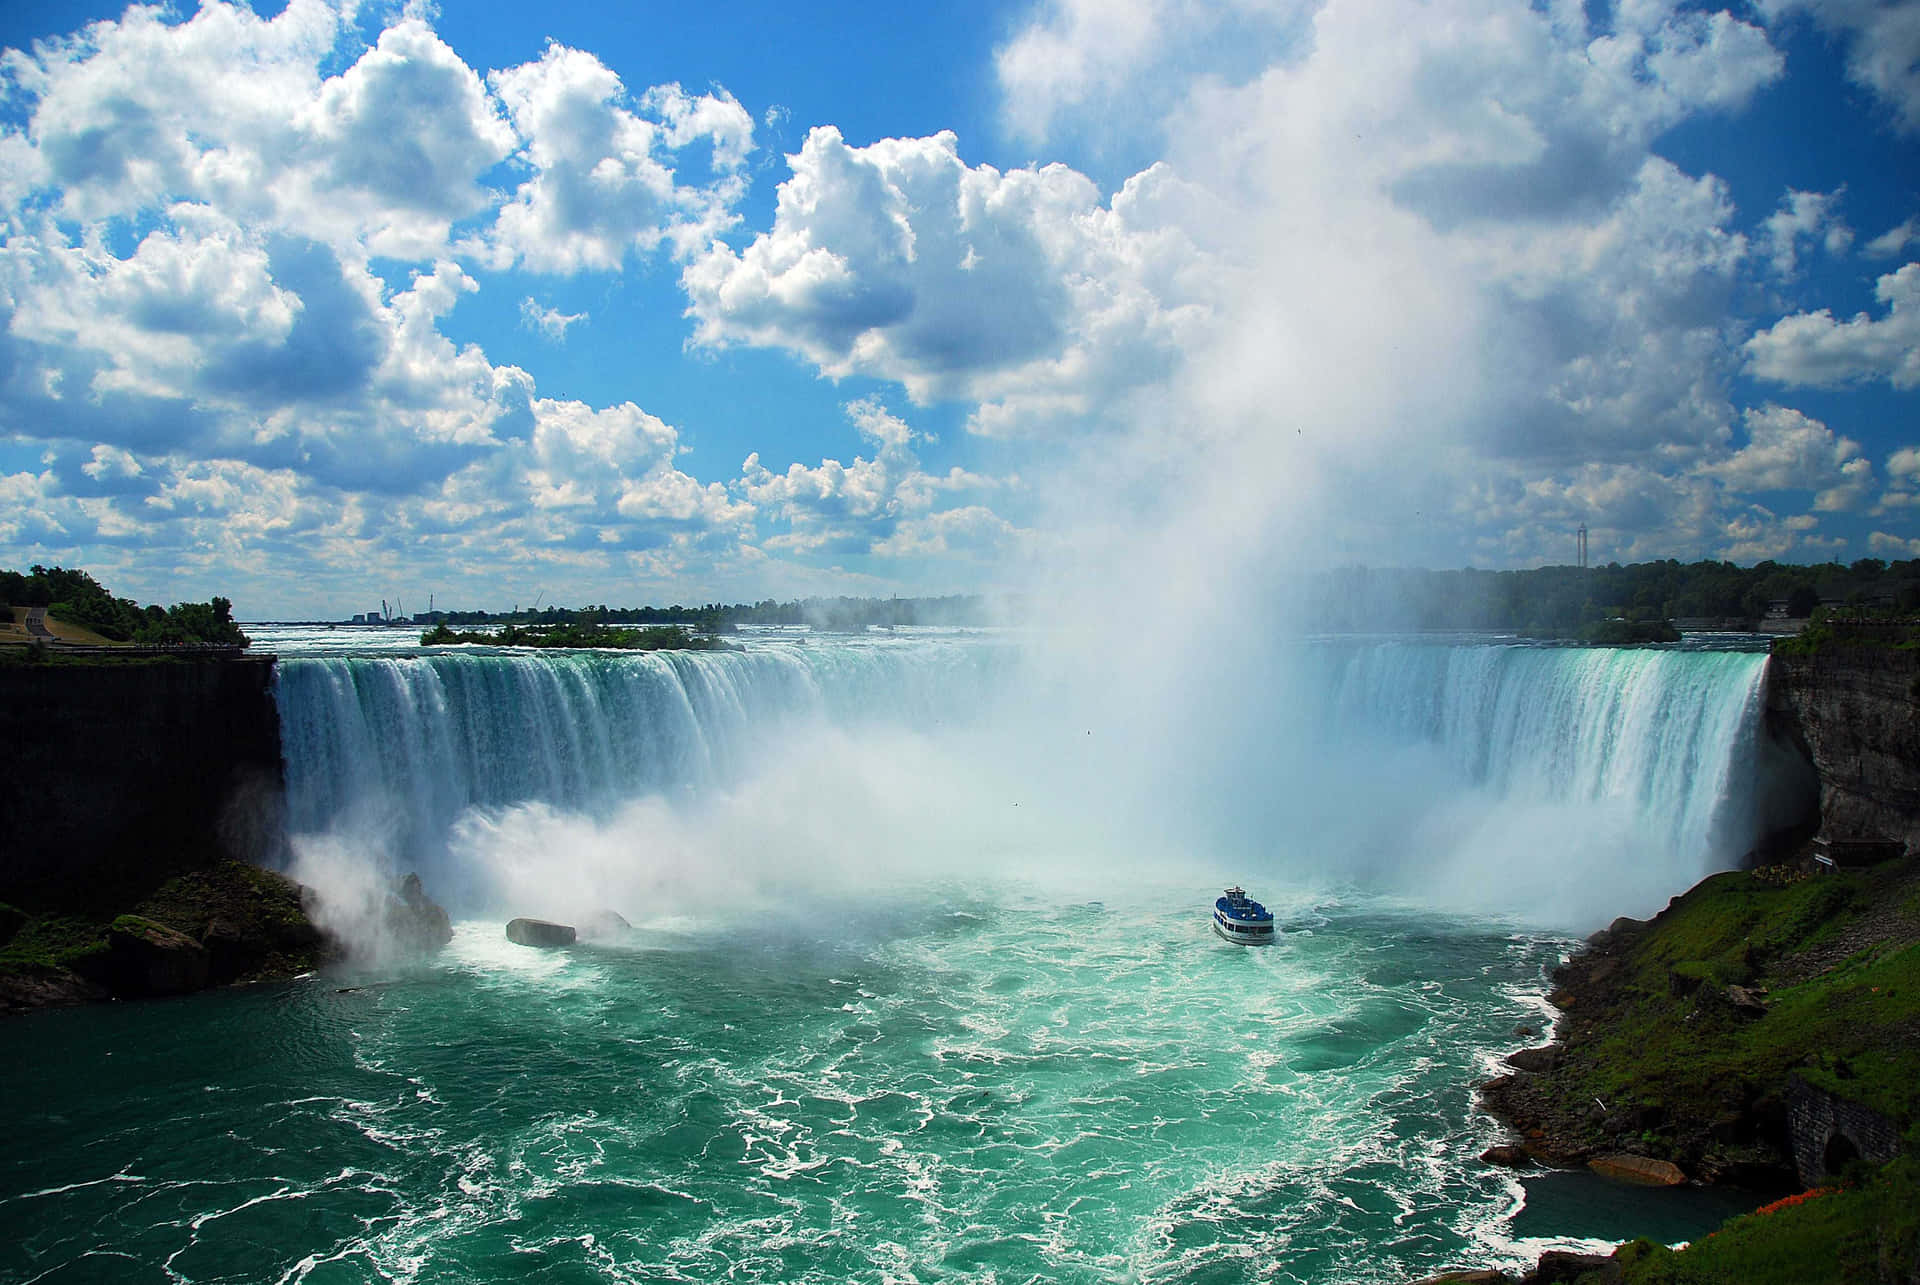 Niagarafallen,kanada, Niagarafallen, Kanada, Niagarafallen, Kanada.